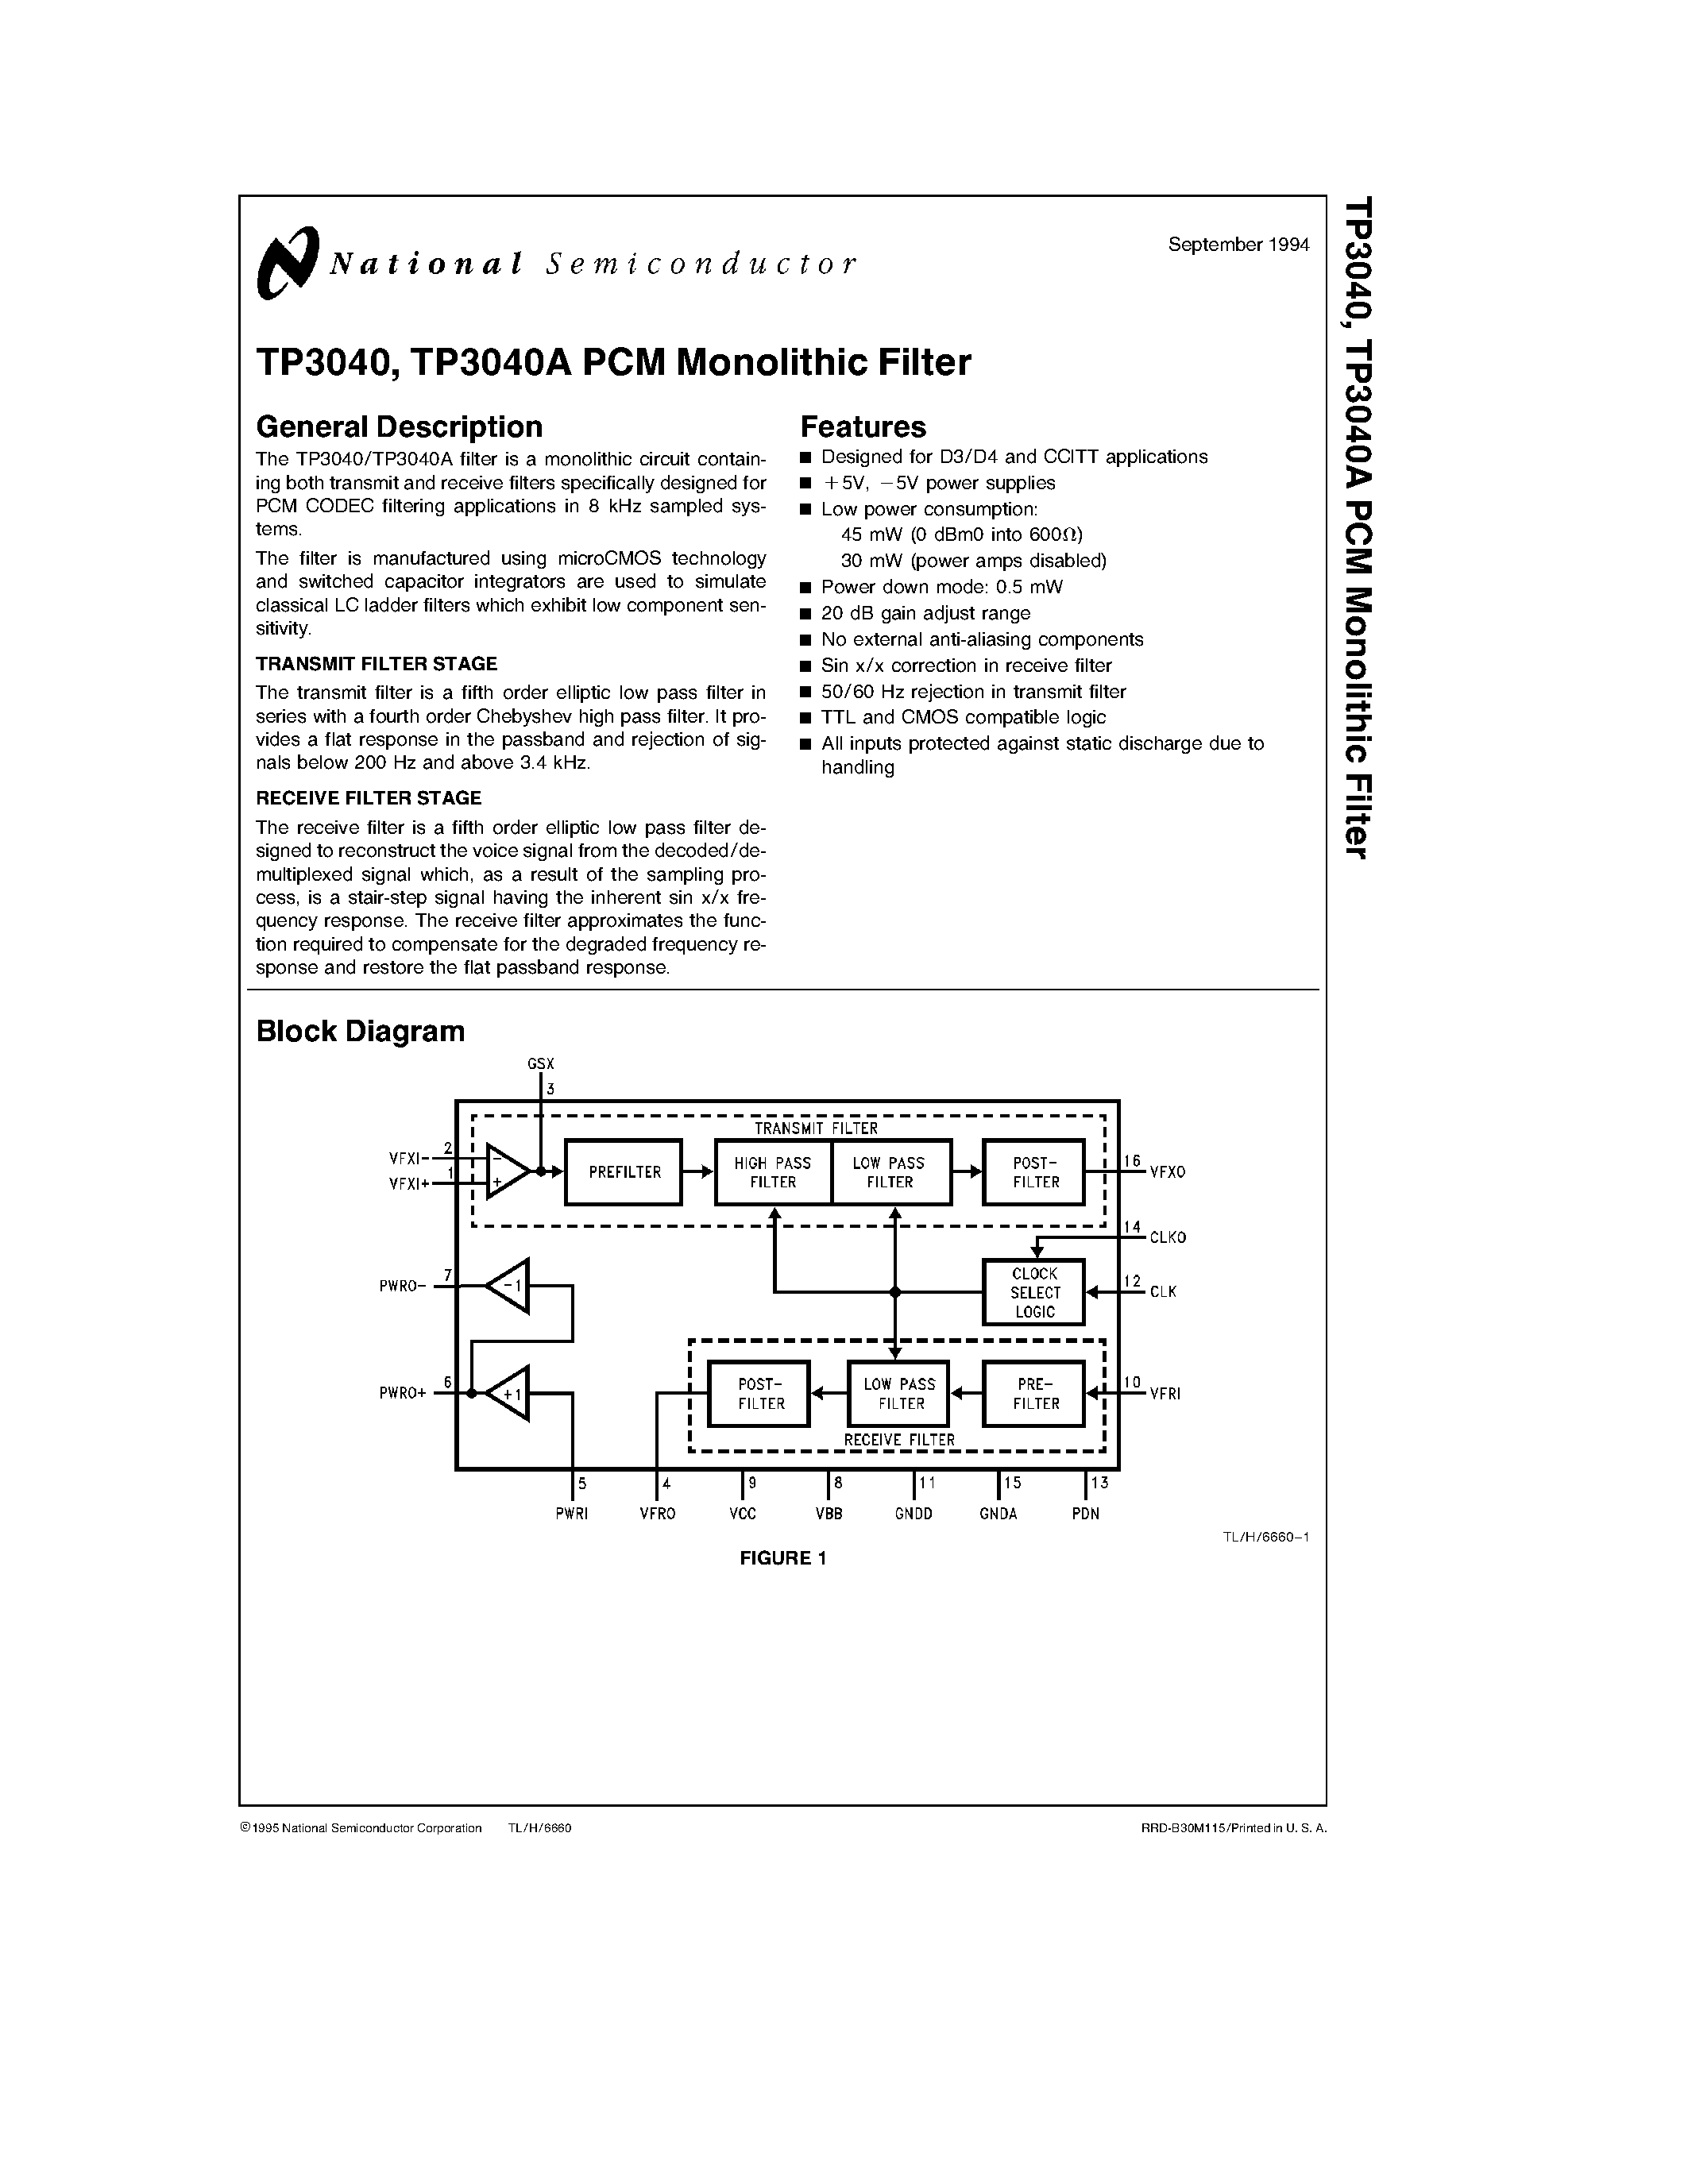 Datasheet TP3040 - TP3040/ TP3040A PCM Monolithic Filter page 1